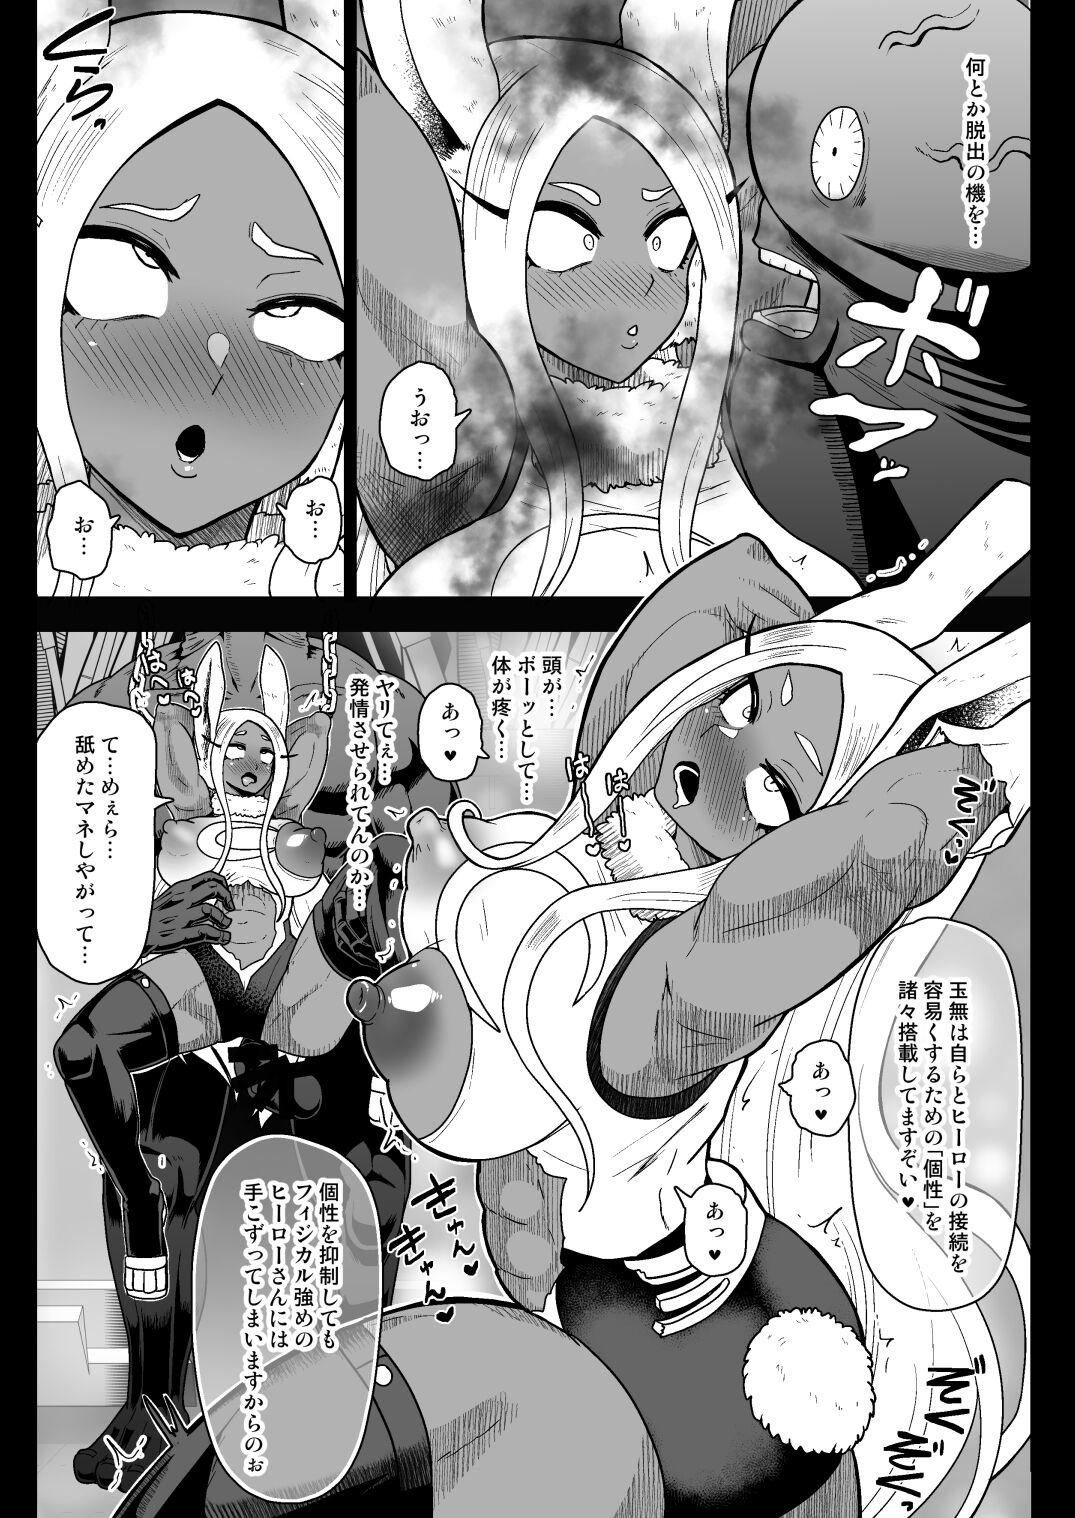 Exposed Ra*t Hero Mirko VS Android Tamanashi - My hero academia | boku no hero academia 18yo - Page 10